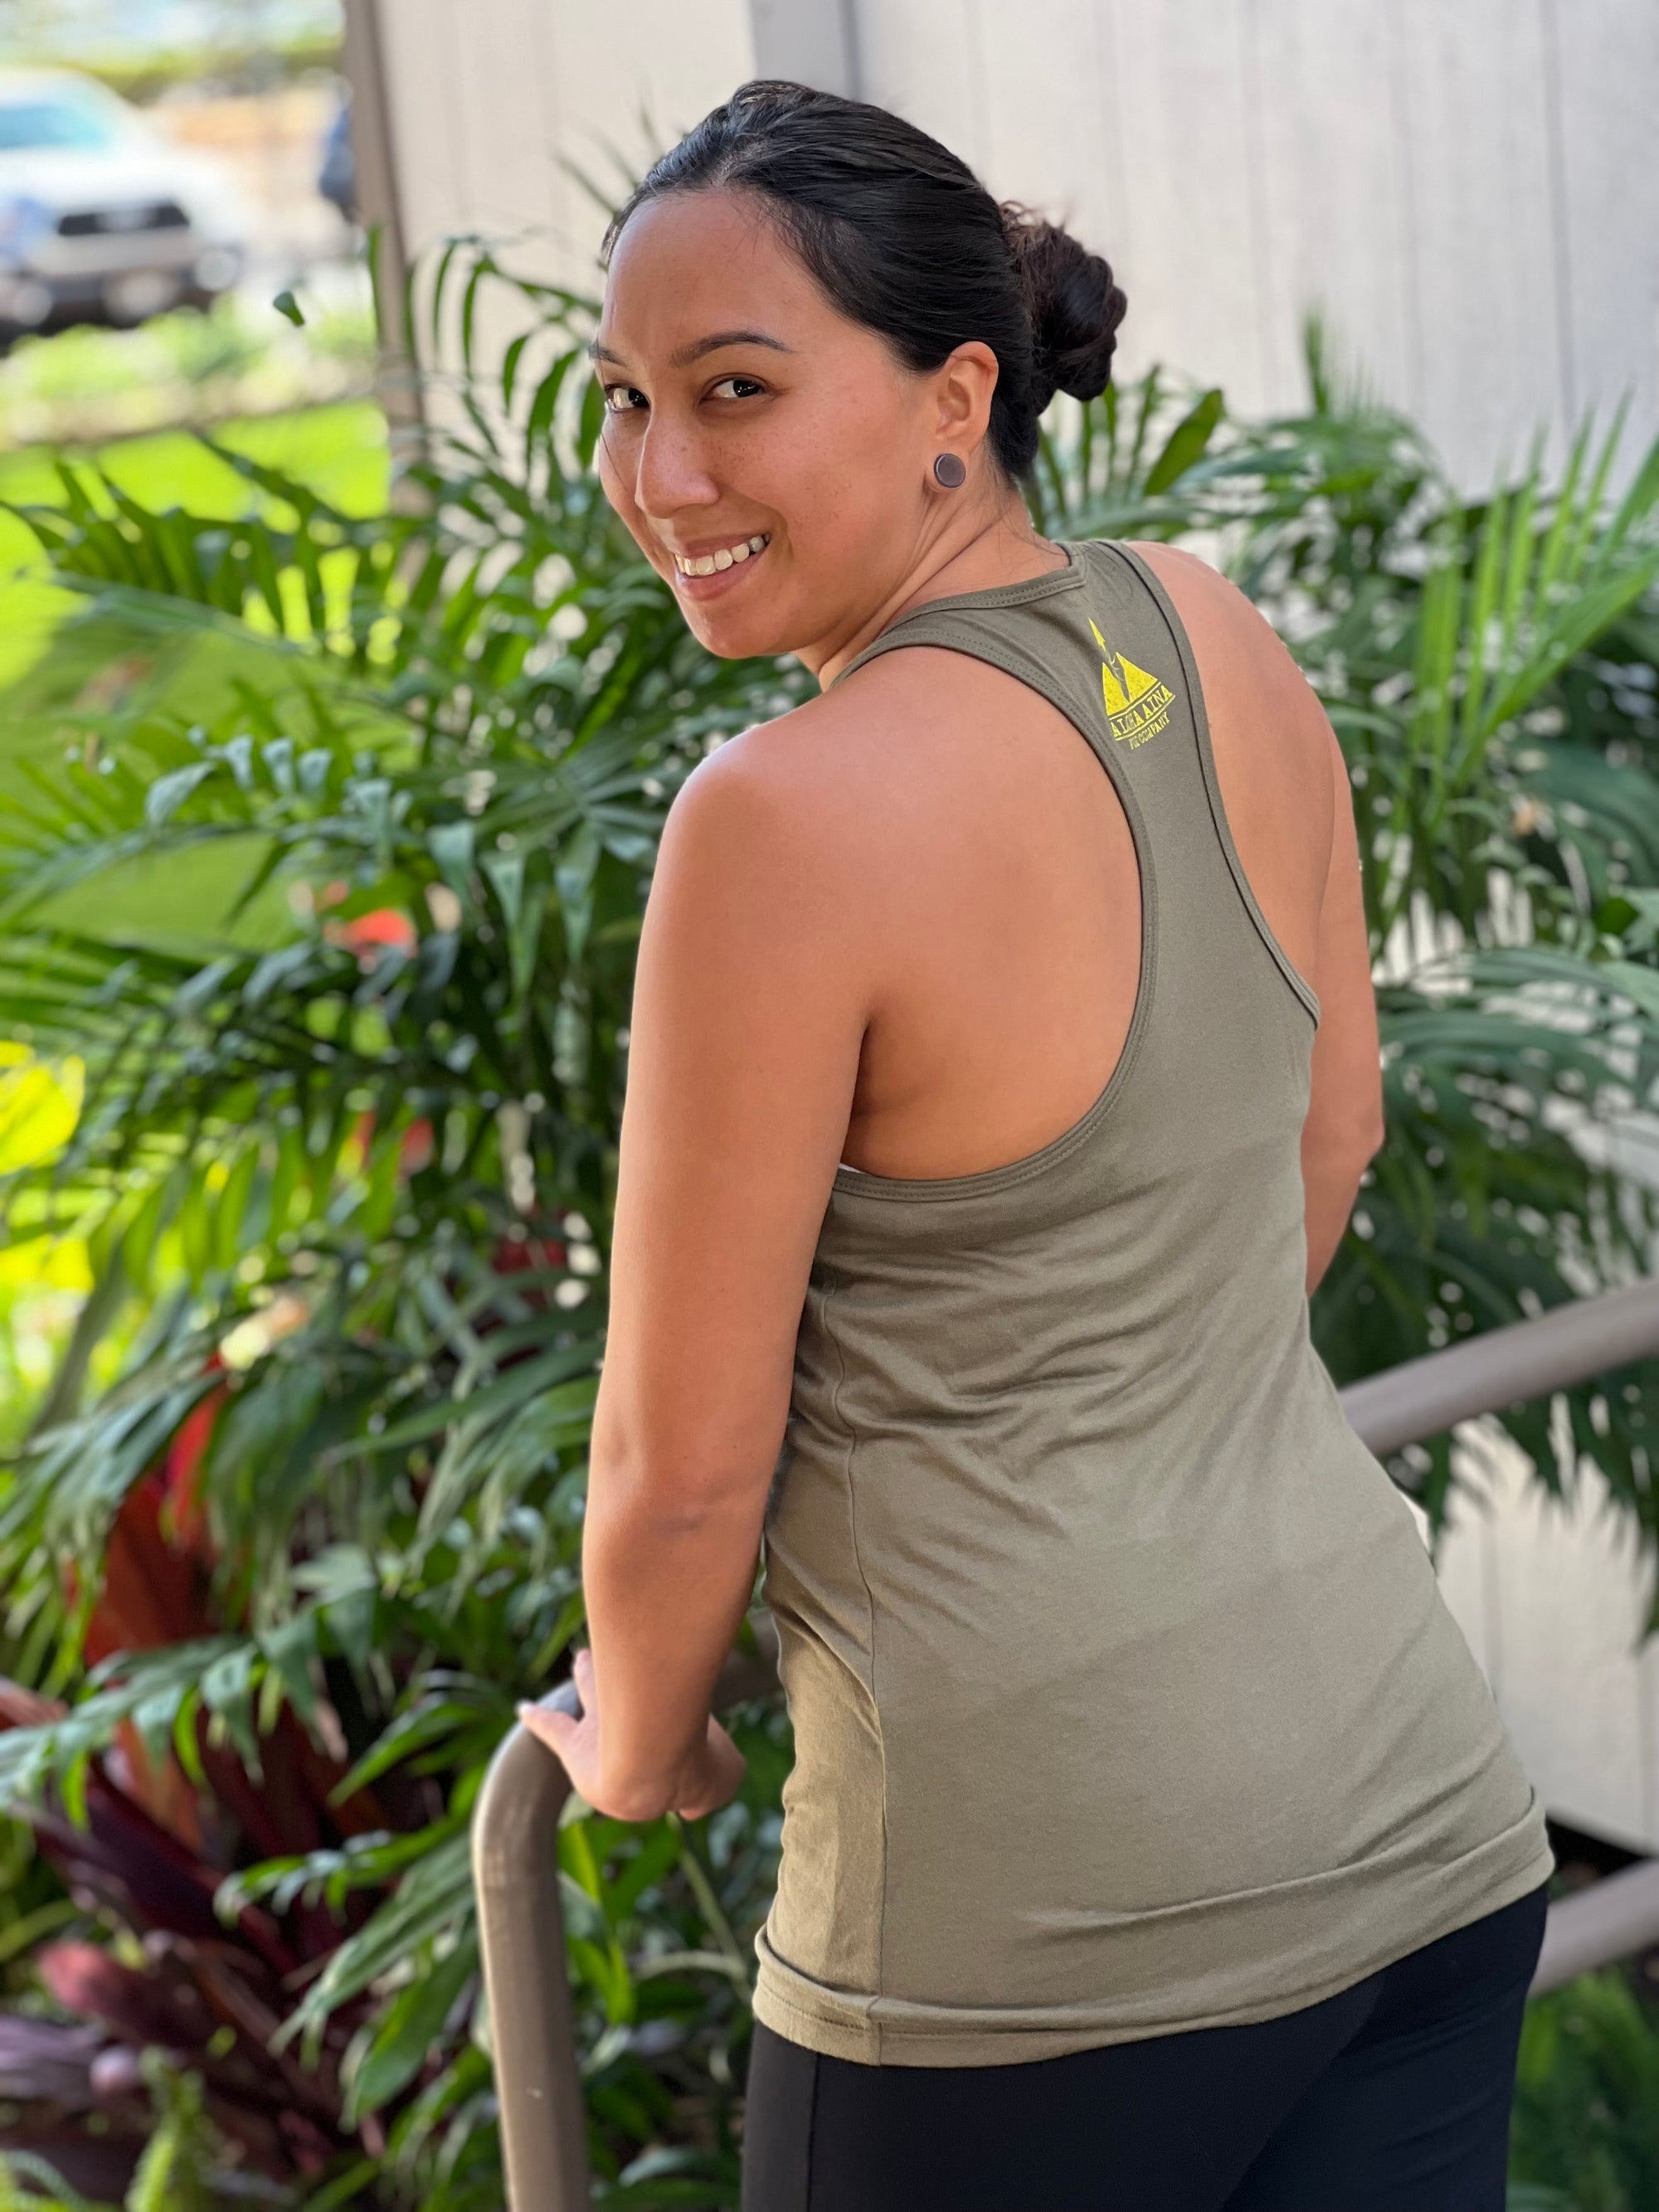 Pop-Up Mākeke - Aloha Aina Poi Co. - Poi Bag Label Women's Racerback Tank Top - Military Green - Back View